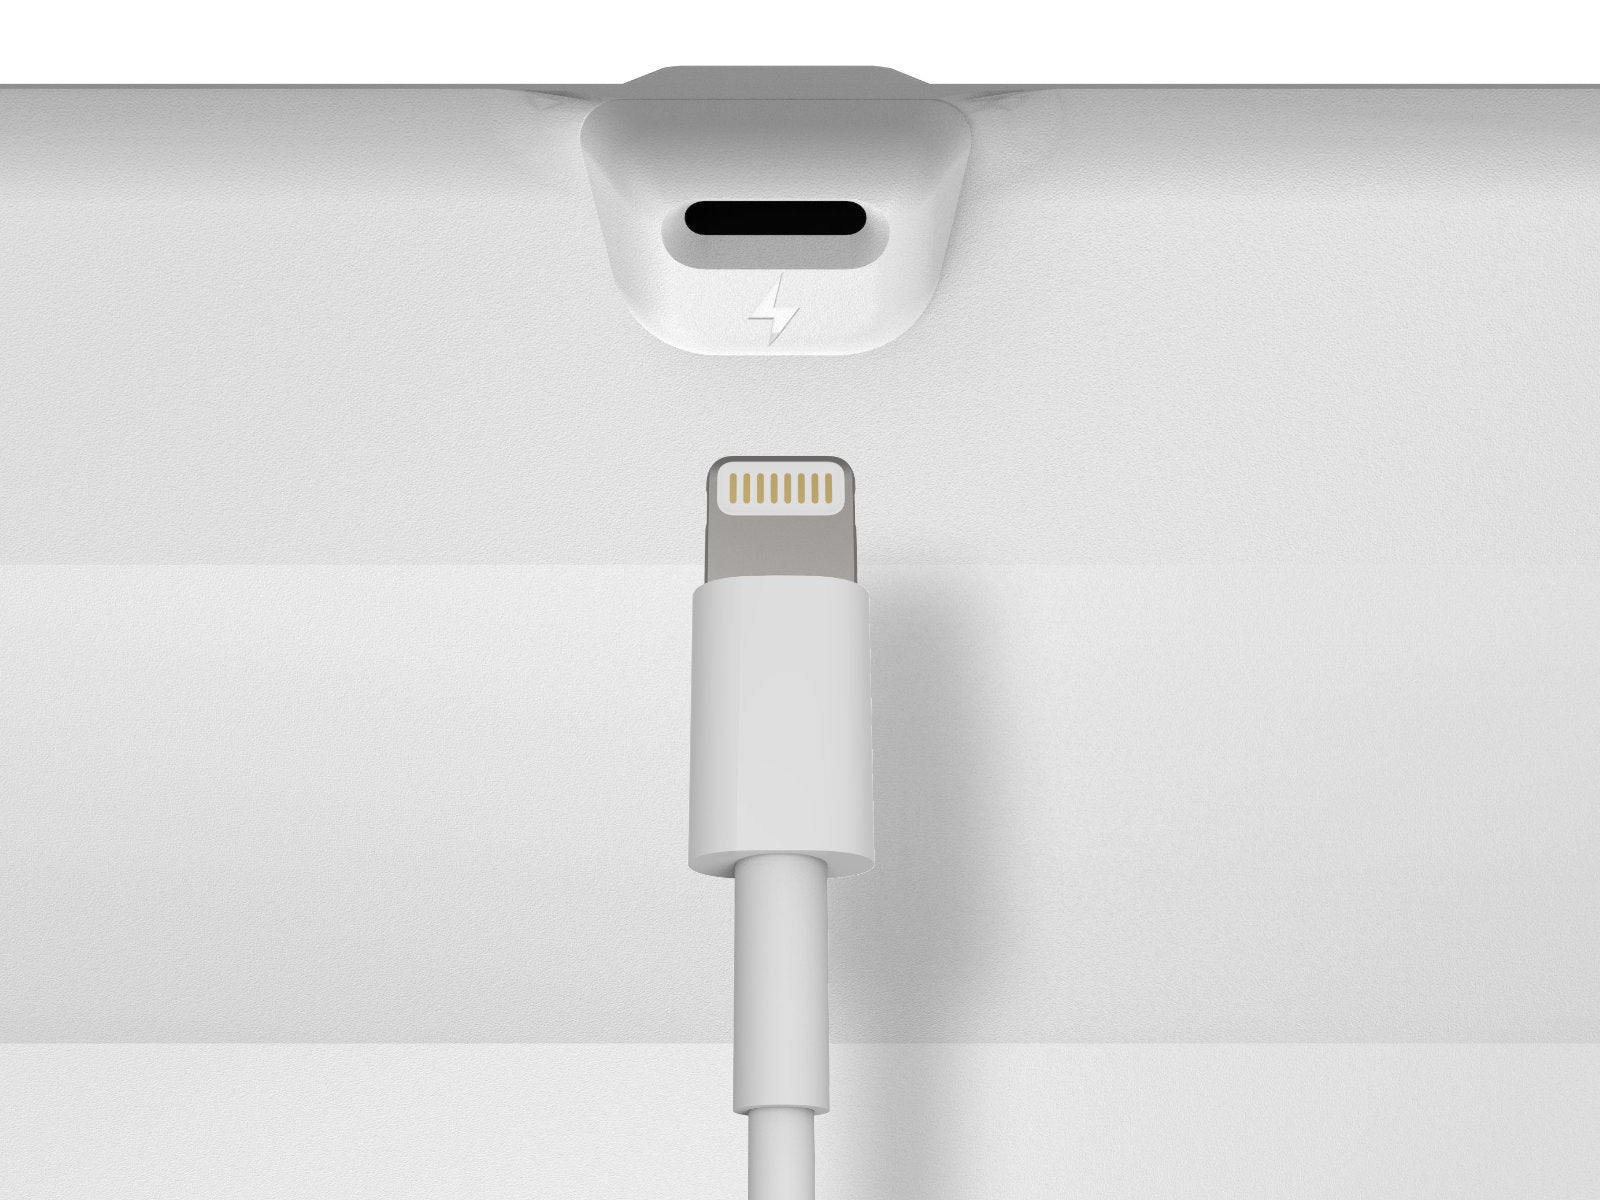 SimpliDock for iPad Installation Charging Inside Wall